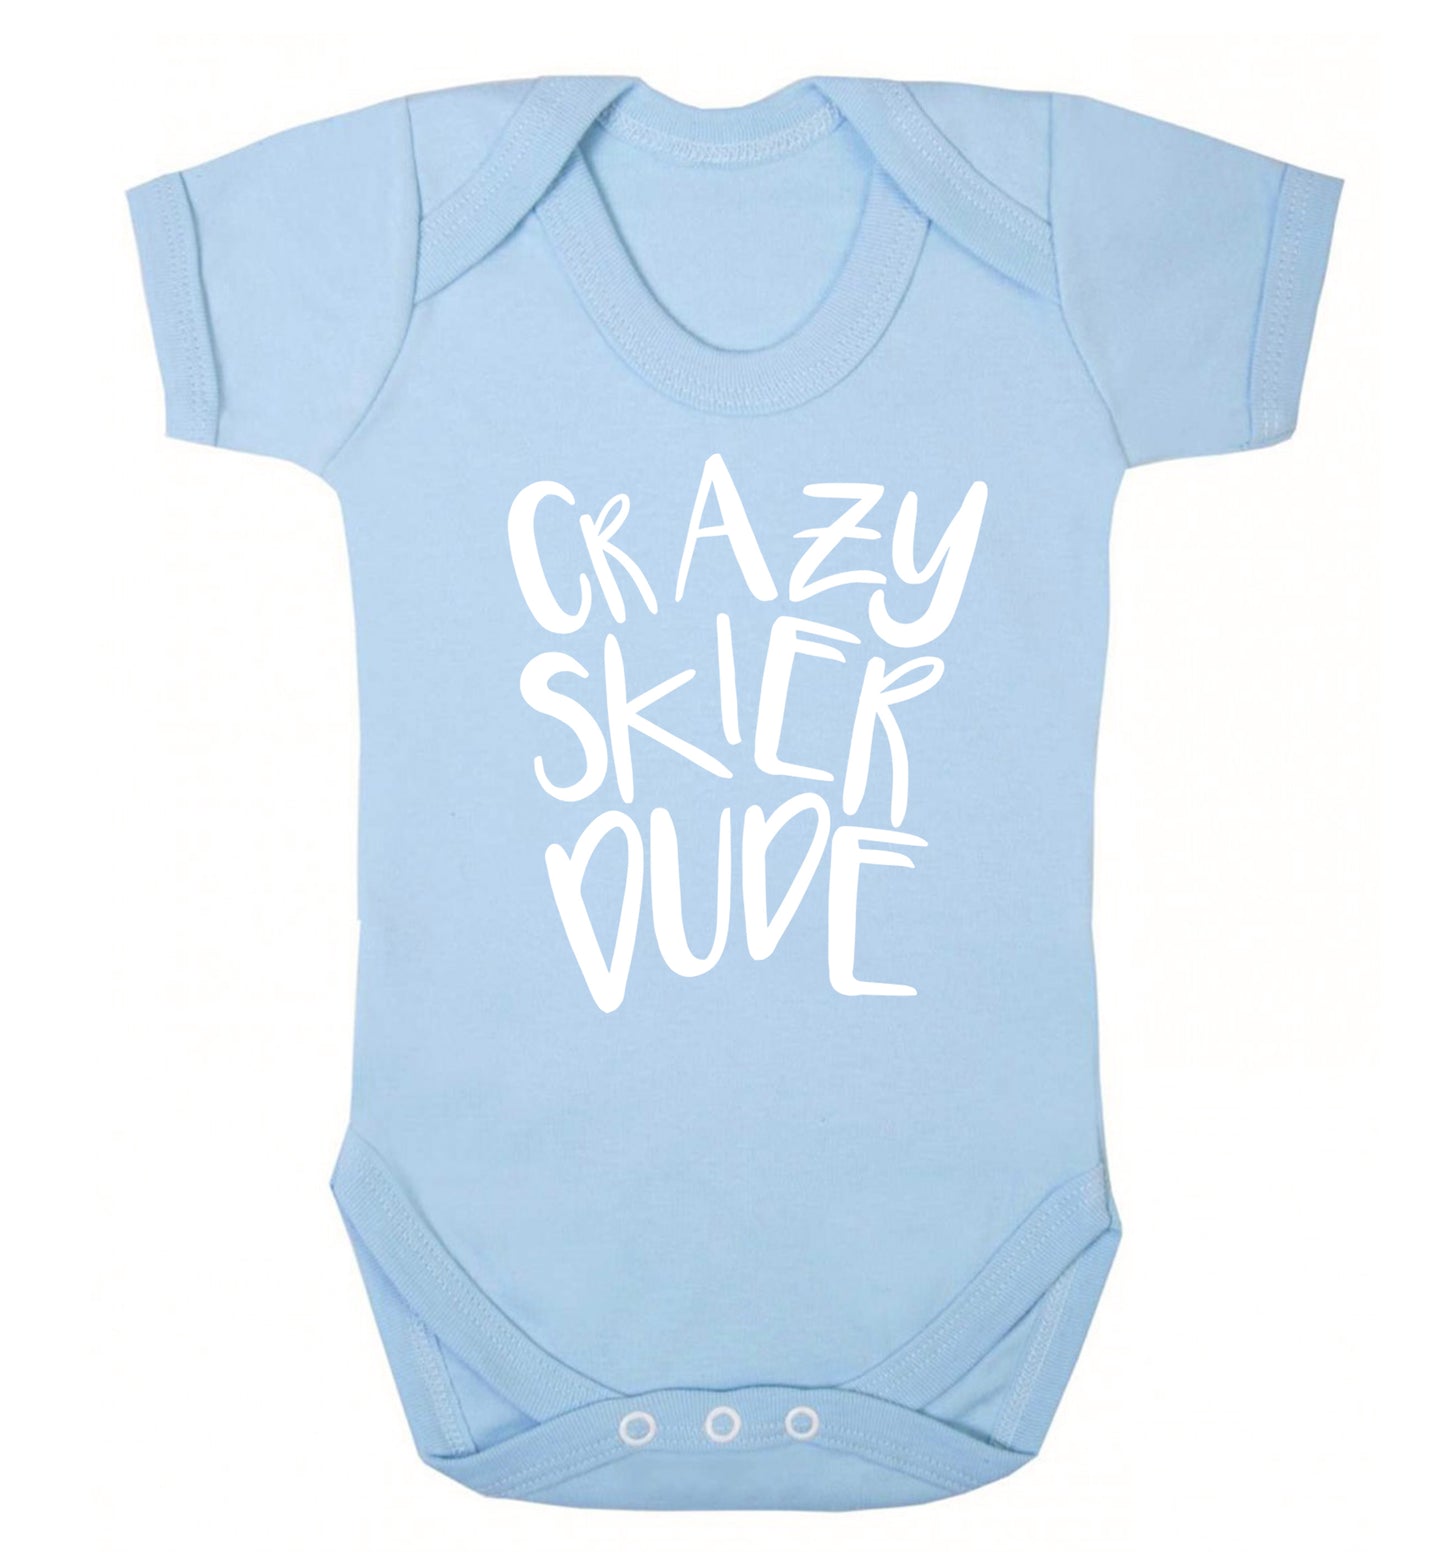 Crazy skier dude Baby Vest pale blue 18-24 months